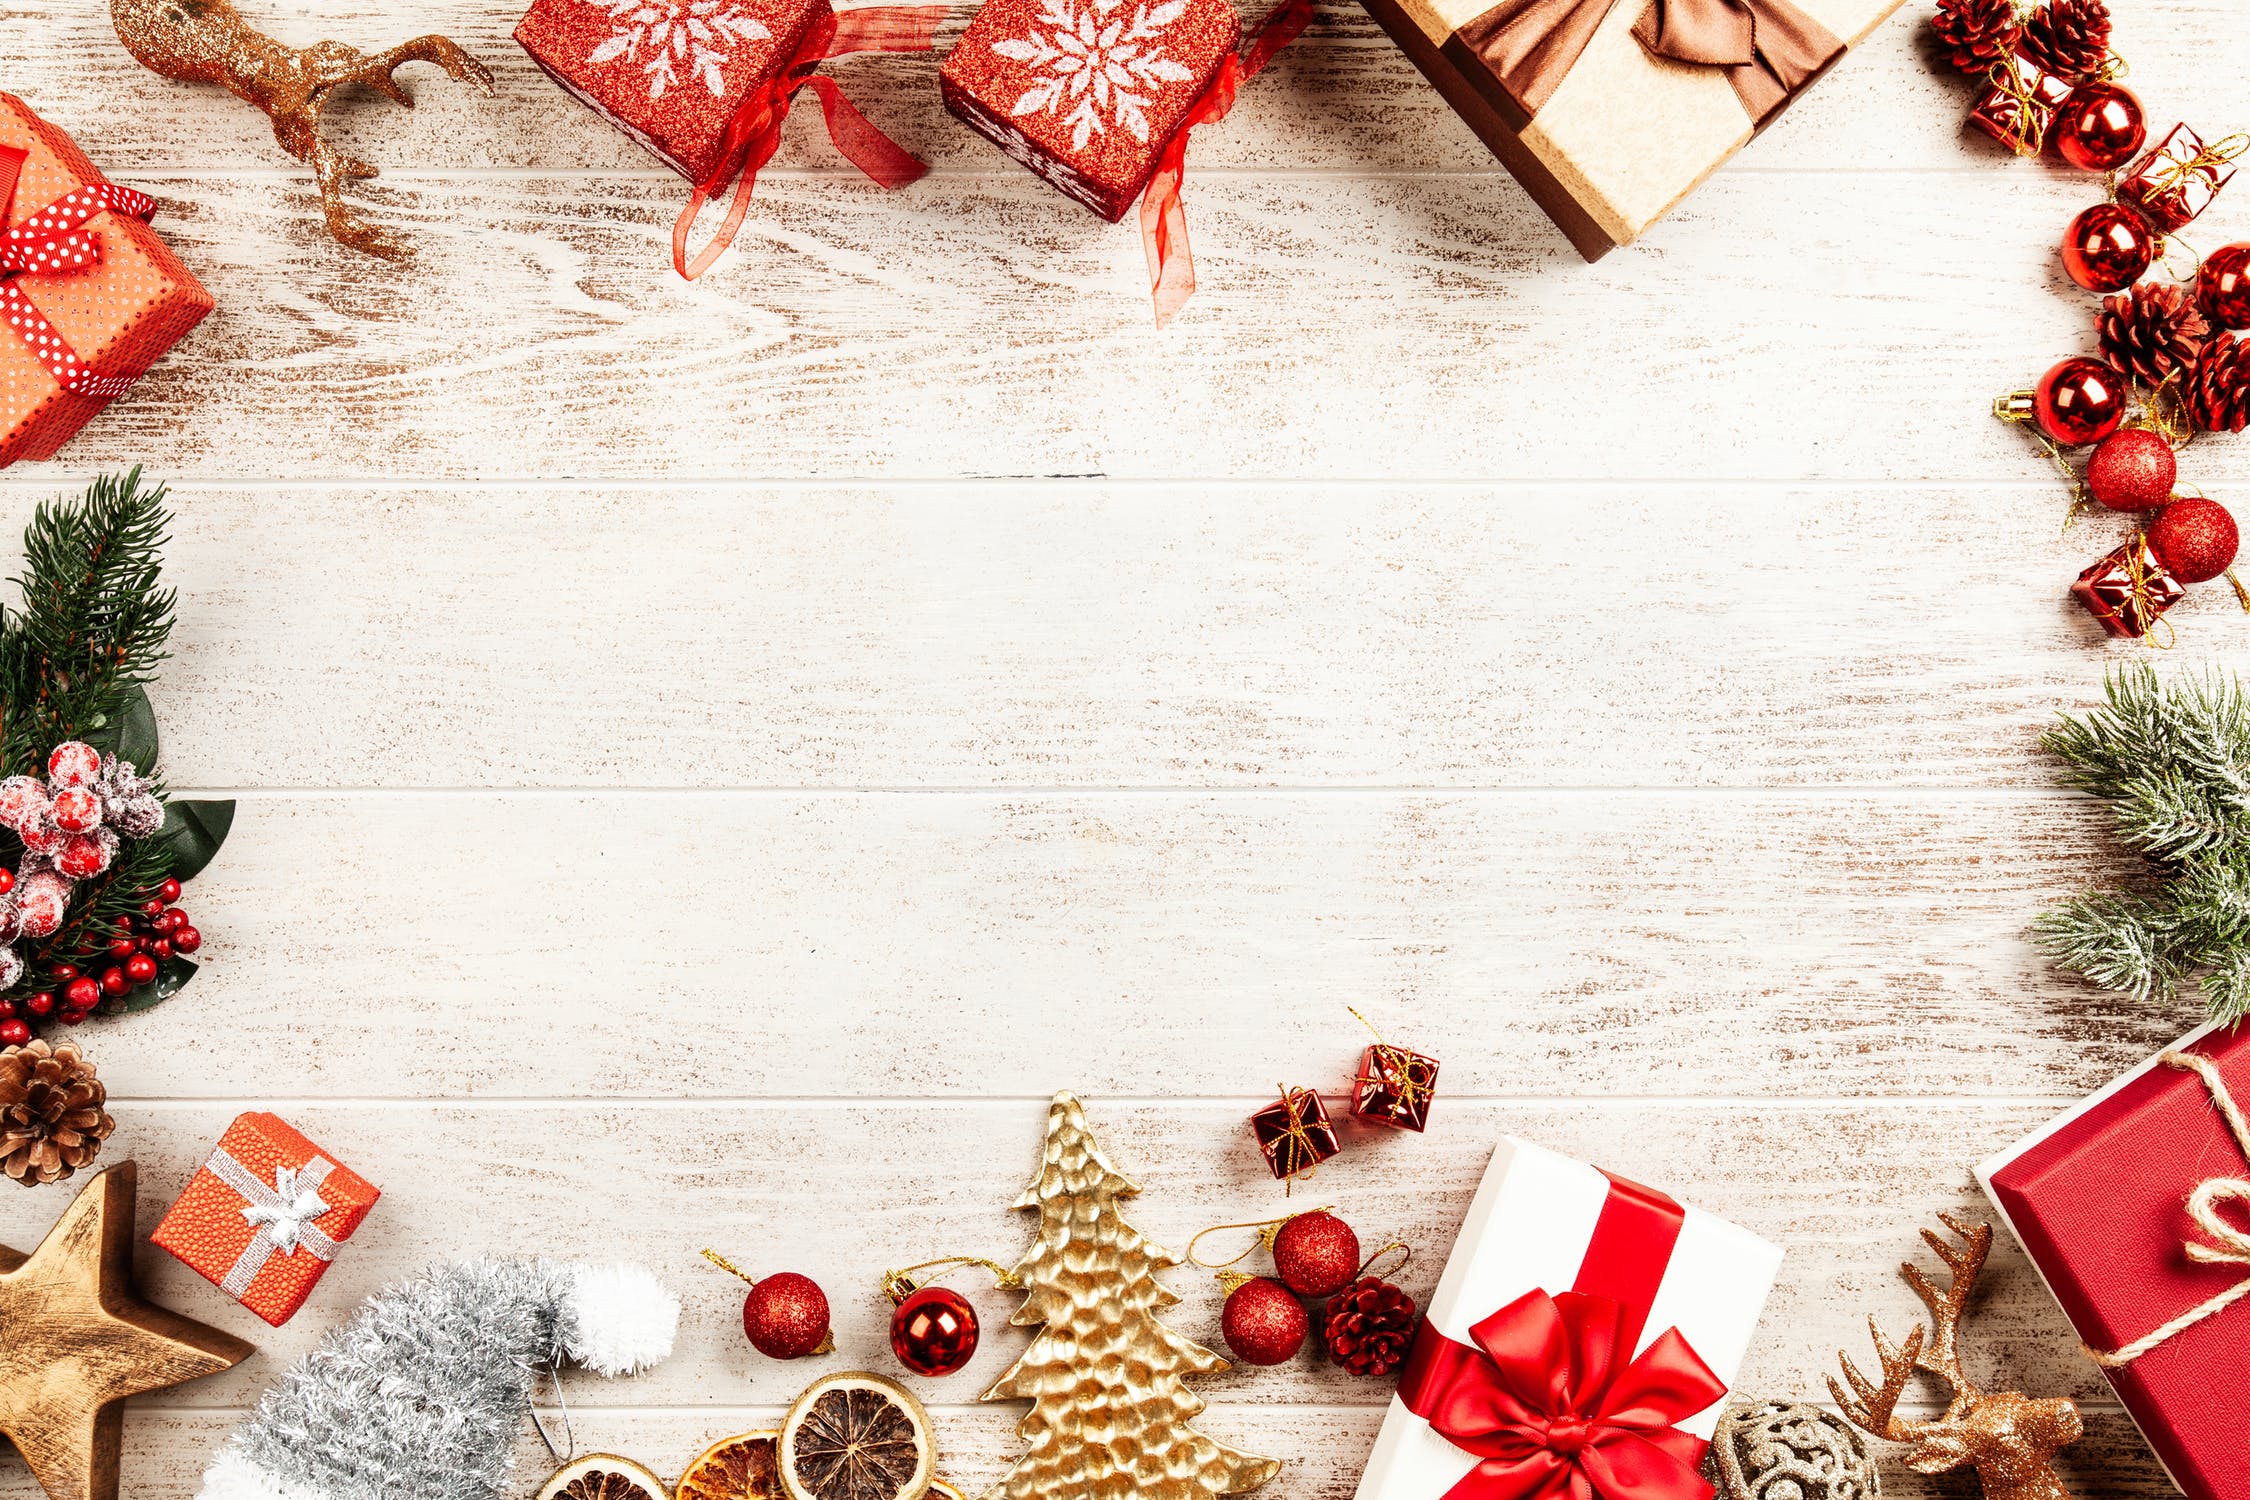 Auguri Di Natale Originali Frasi.Auguri Natalizi 2019 Formali Informali E Originali Frasi E Citazioni